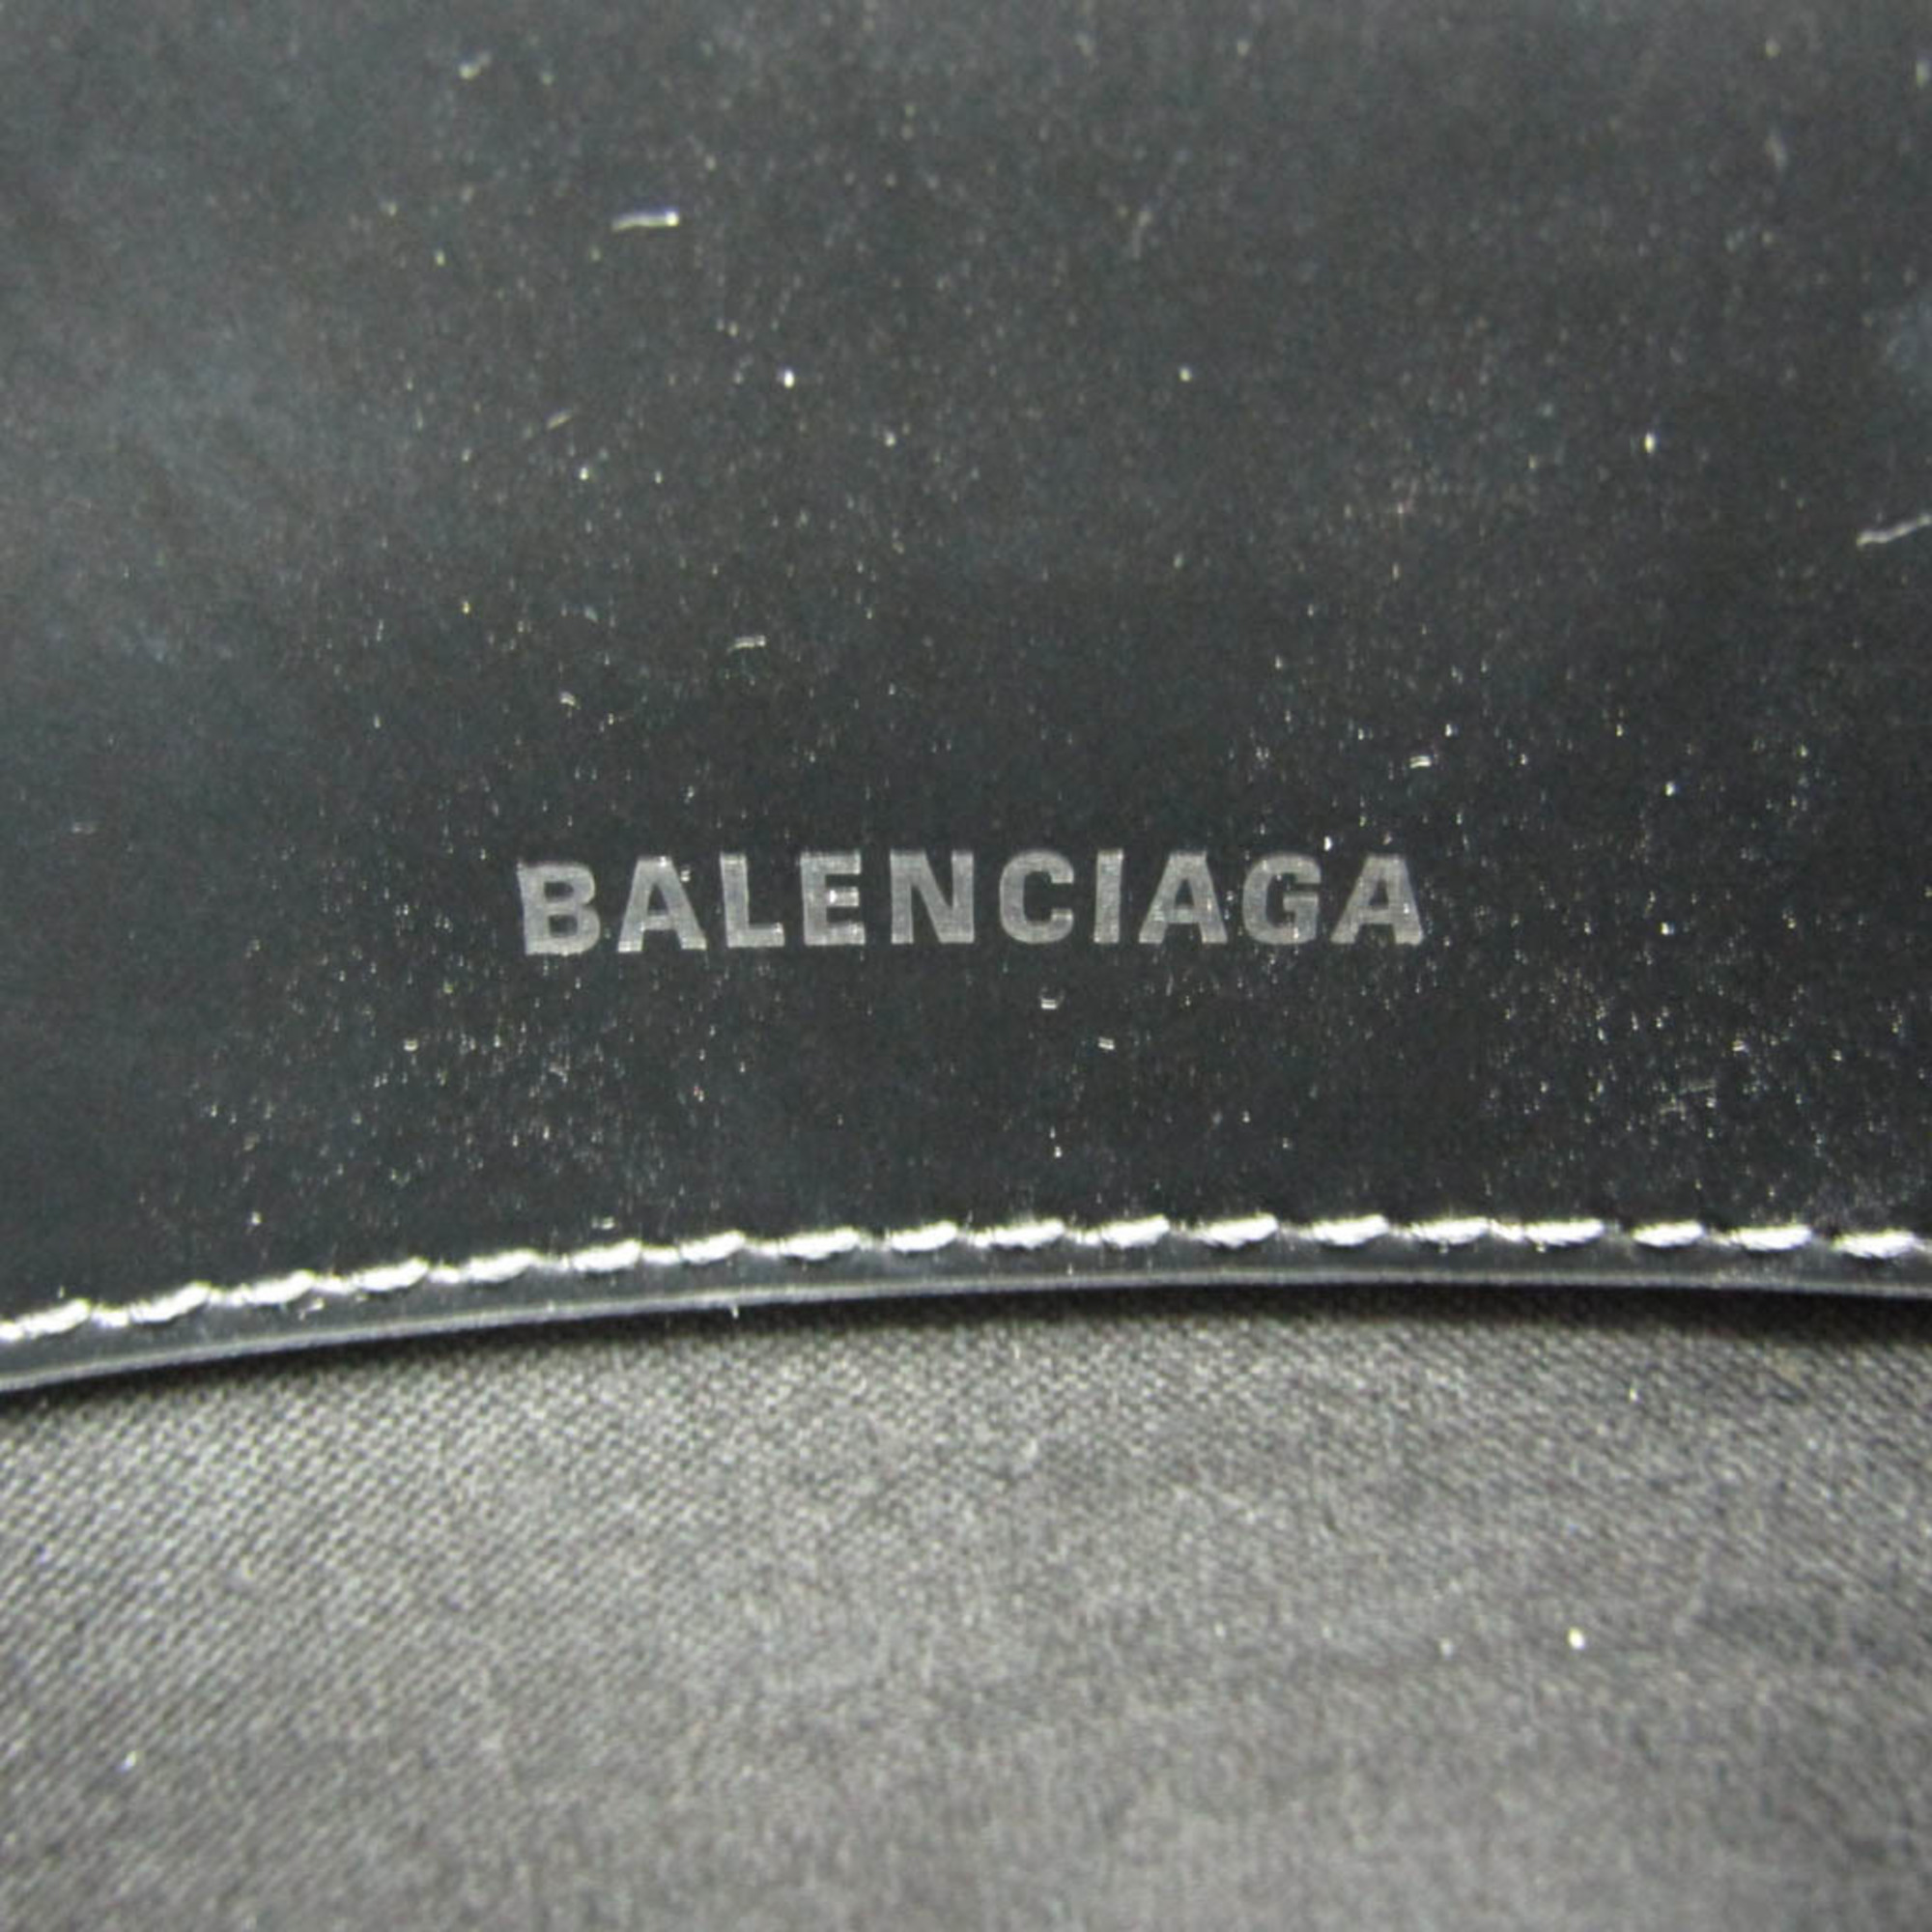 Balenciaga 2948516 Women's Canvas,Leather Shoulder Bag Black,Light Beige